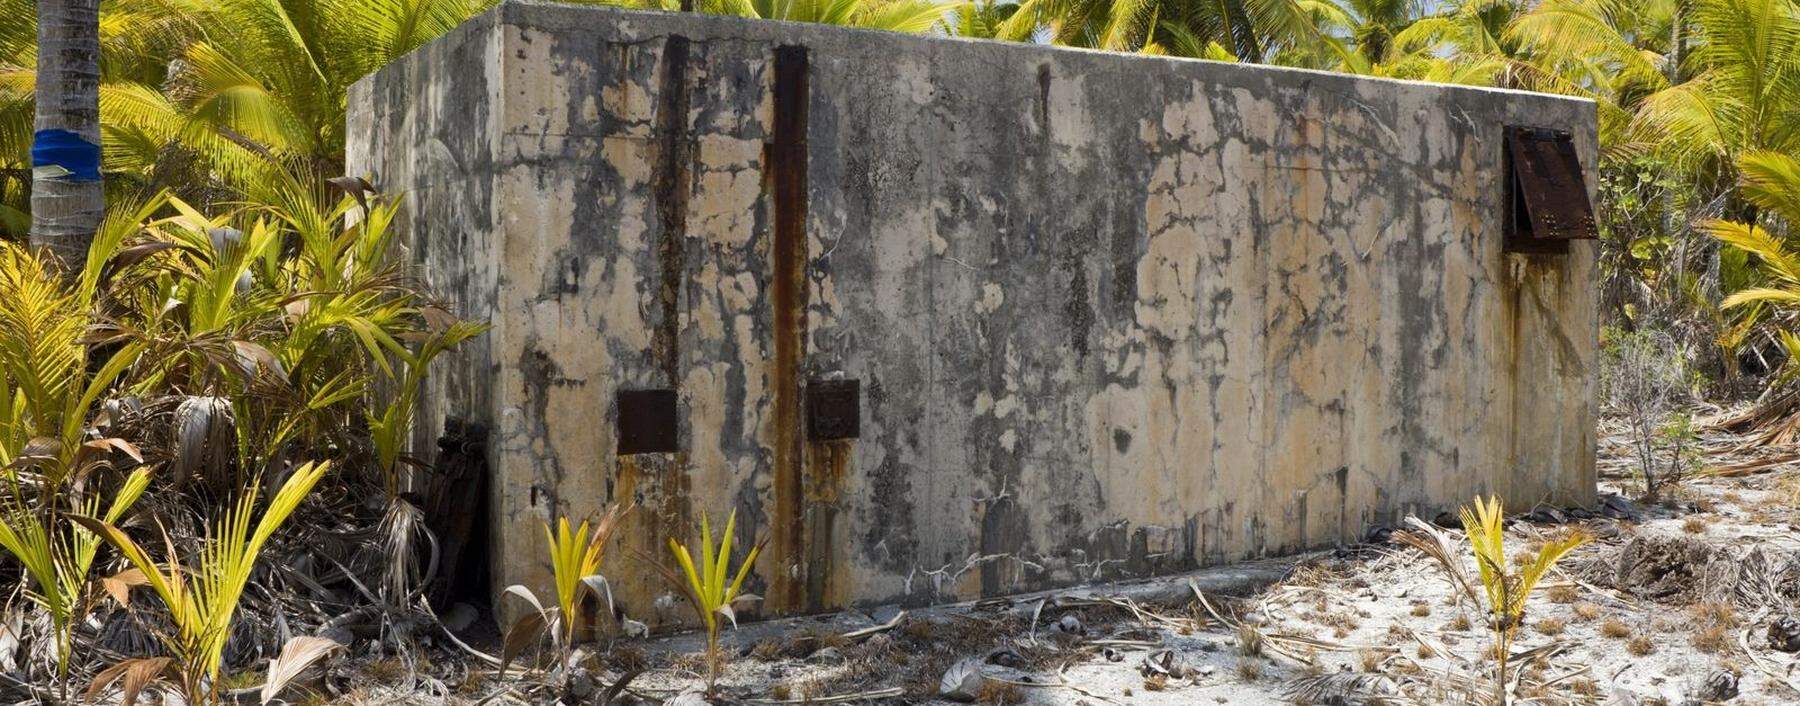 Wie war der Fallout? Beobachtungsbunker für Atomwaffentests, Bikini-Atoll, Marshallinseln. 